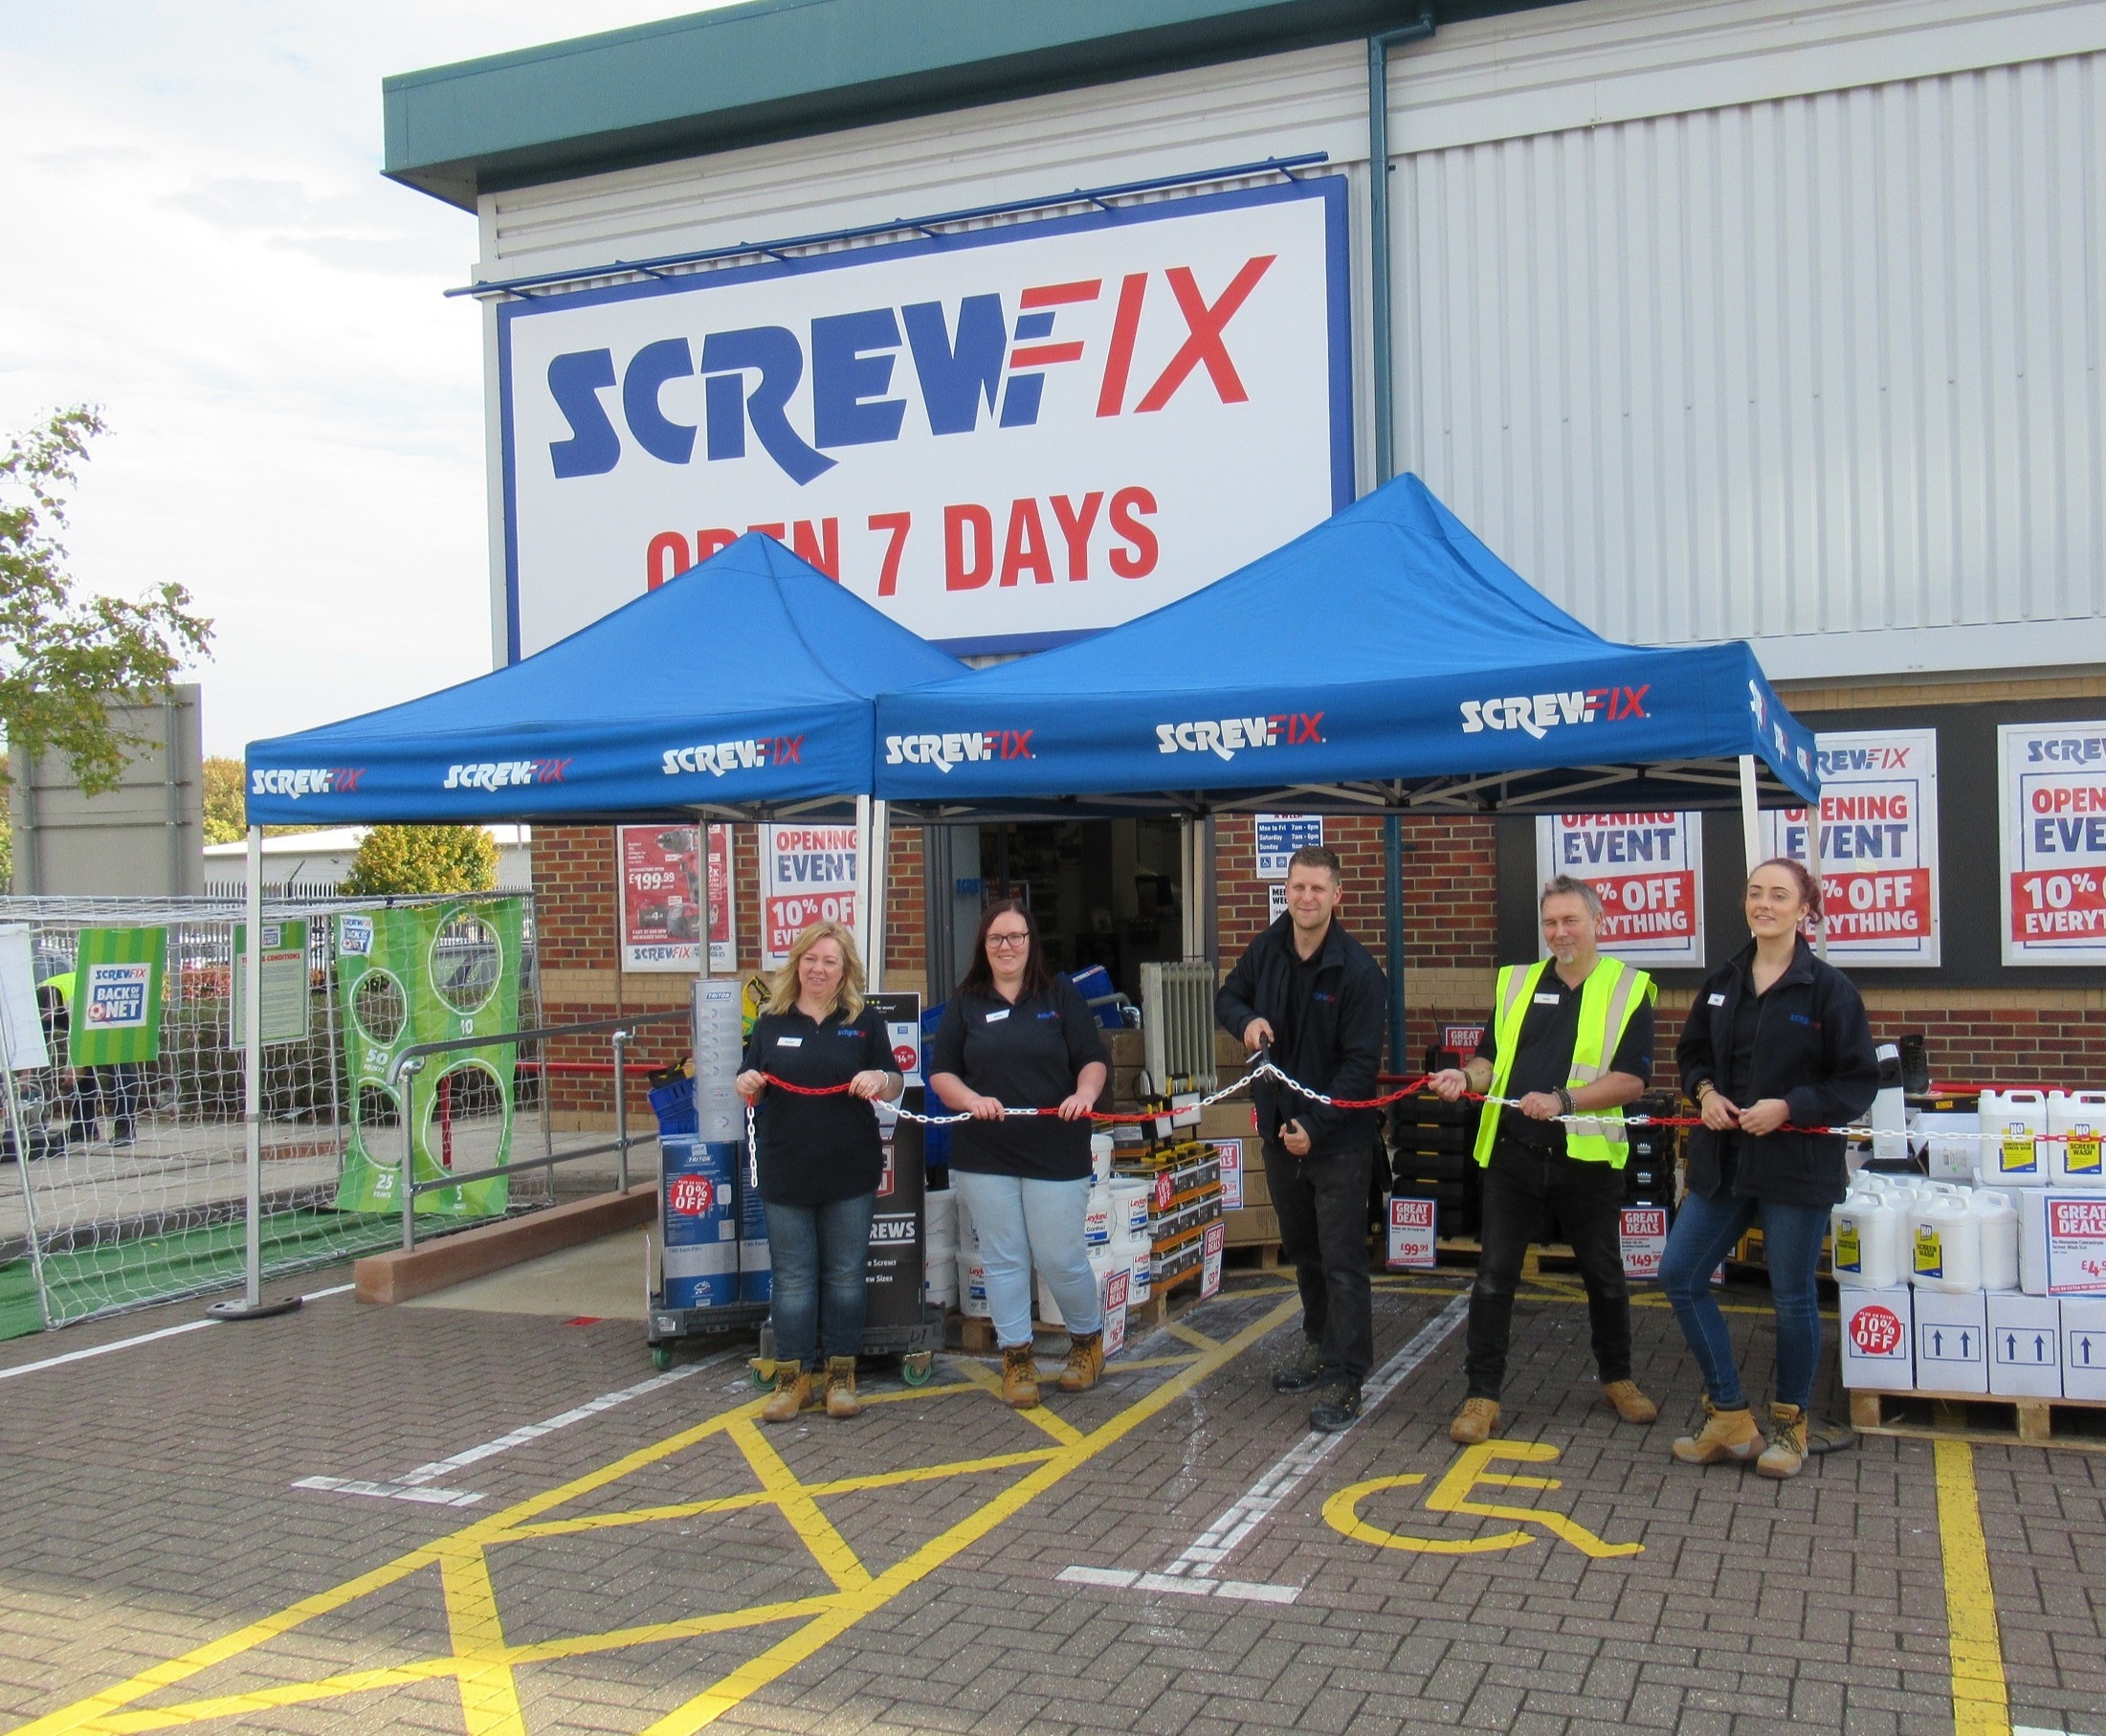 Swindon’s Third Screwfix store, is declared a runaway success